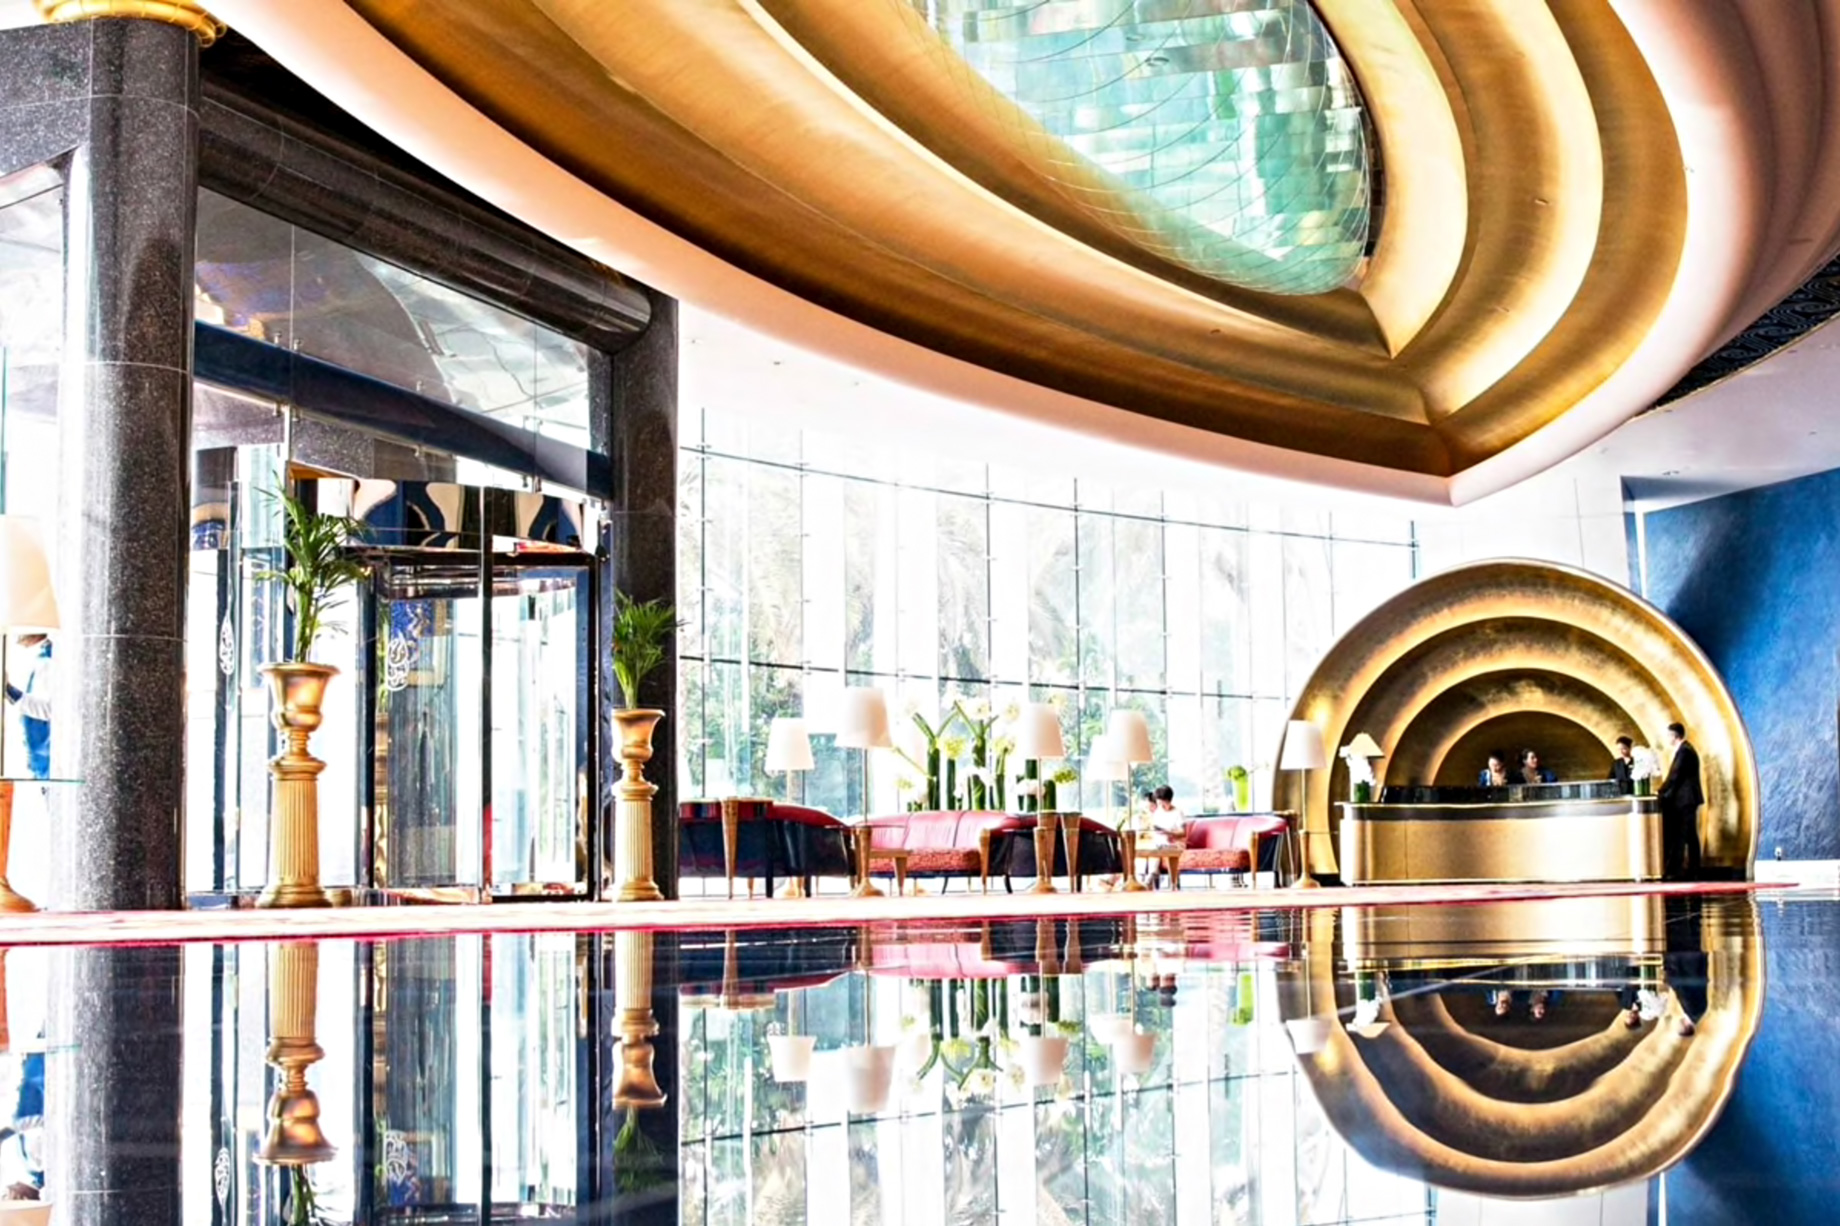 Burj Al Arab Jumeirah Hotel – Dubai, UAE – Entrance Lobby